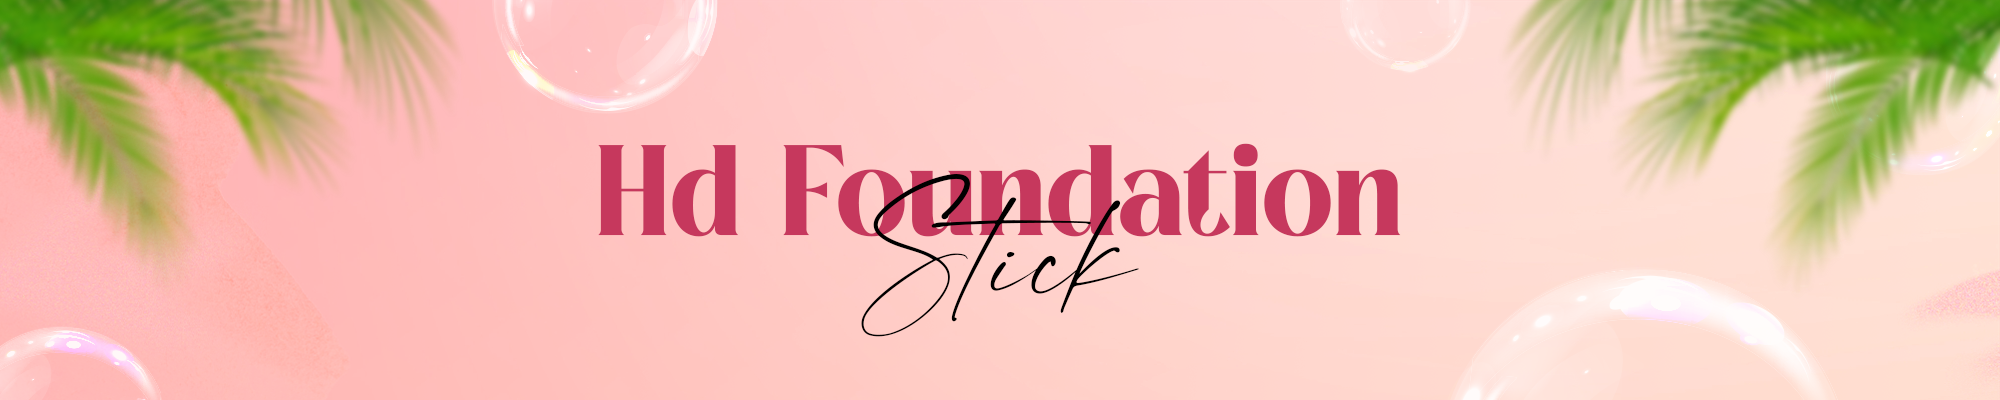 Hd Foundation Stick